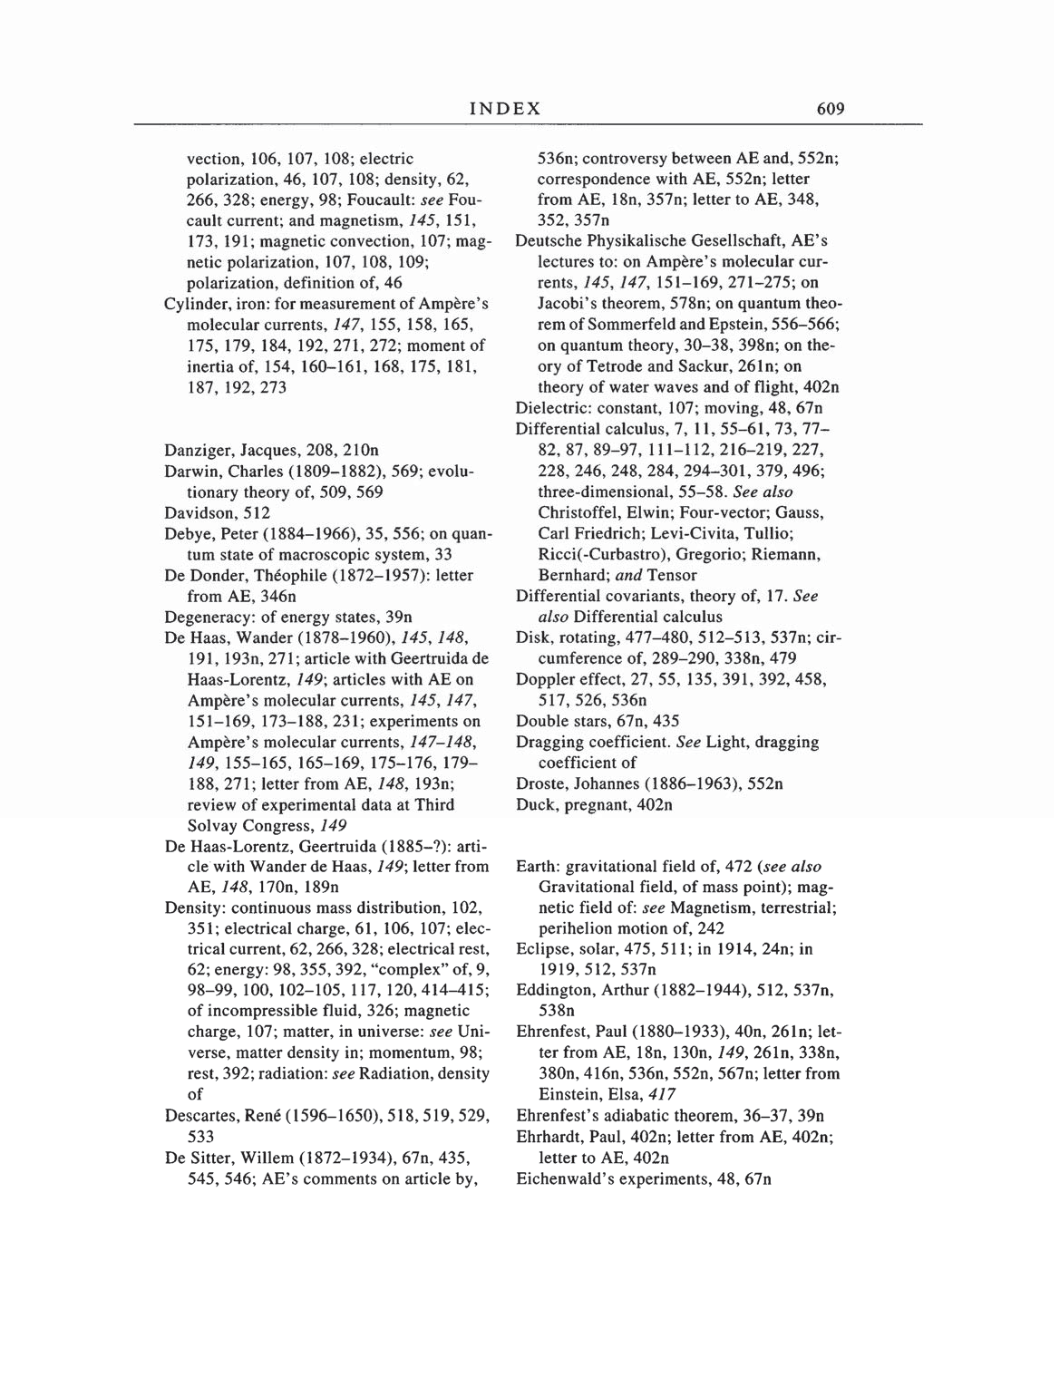 Volume 6: The Berlin Years: Writings, 1914-1917 page 609